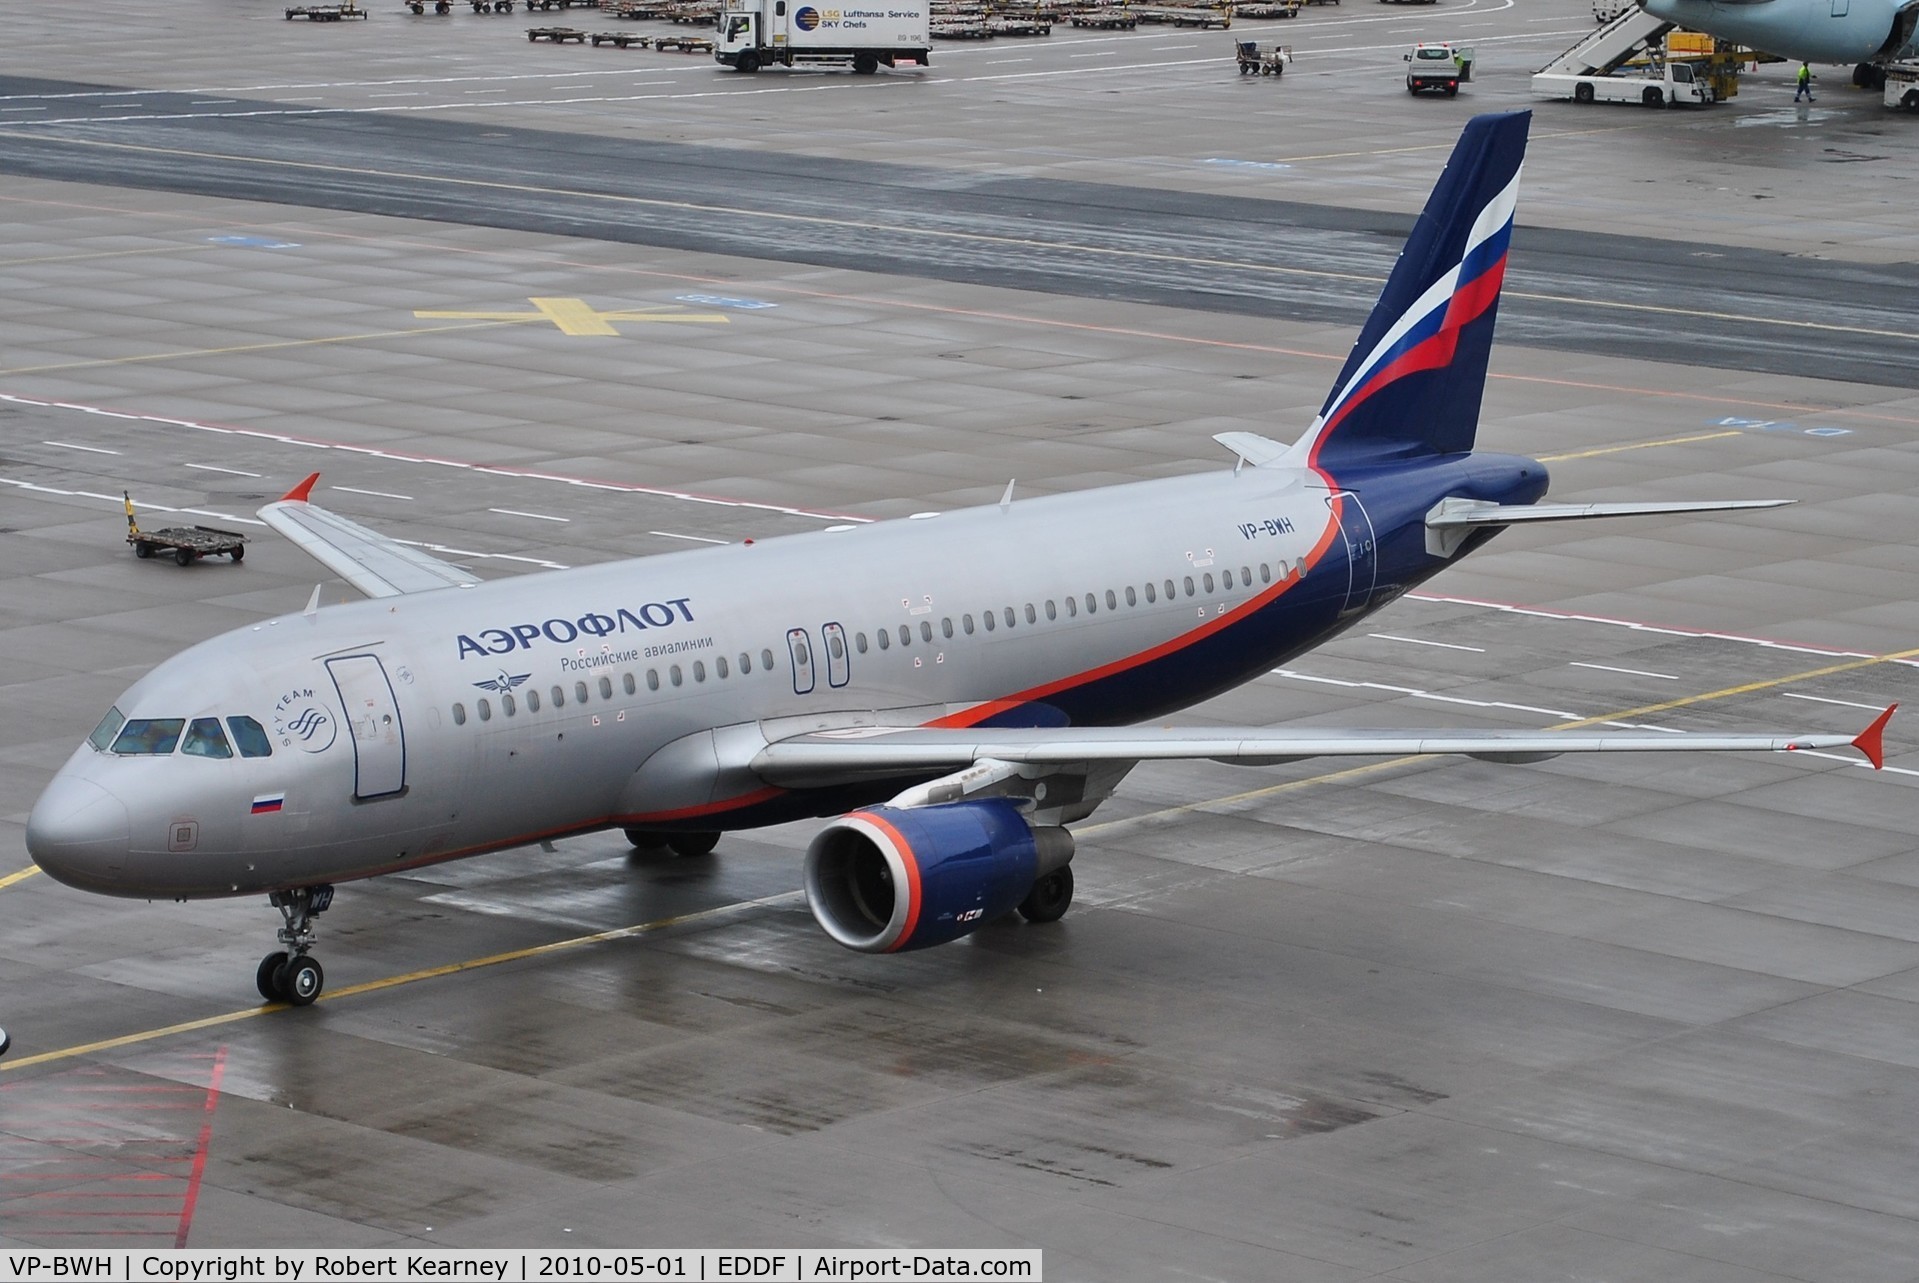 VP-BWH, 2003 Airbus A320-214 C/N 2151, Aeroflot heading to stand